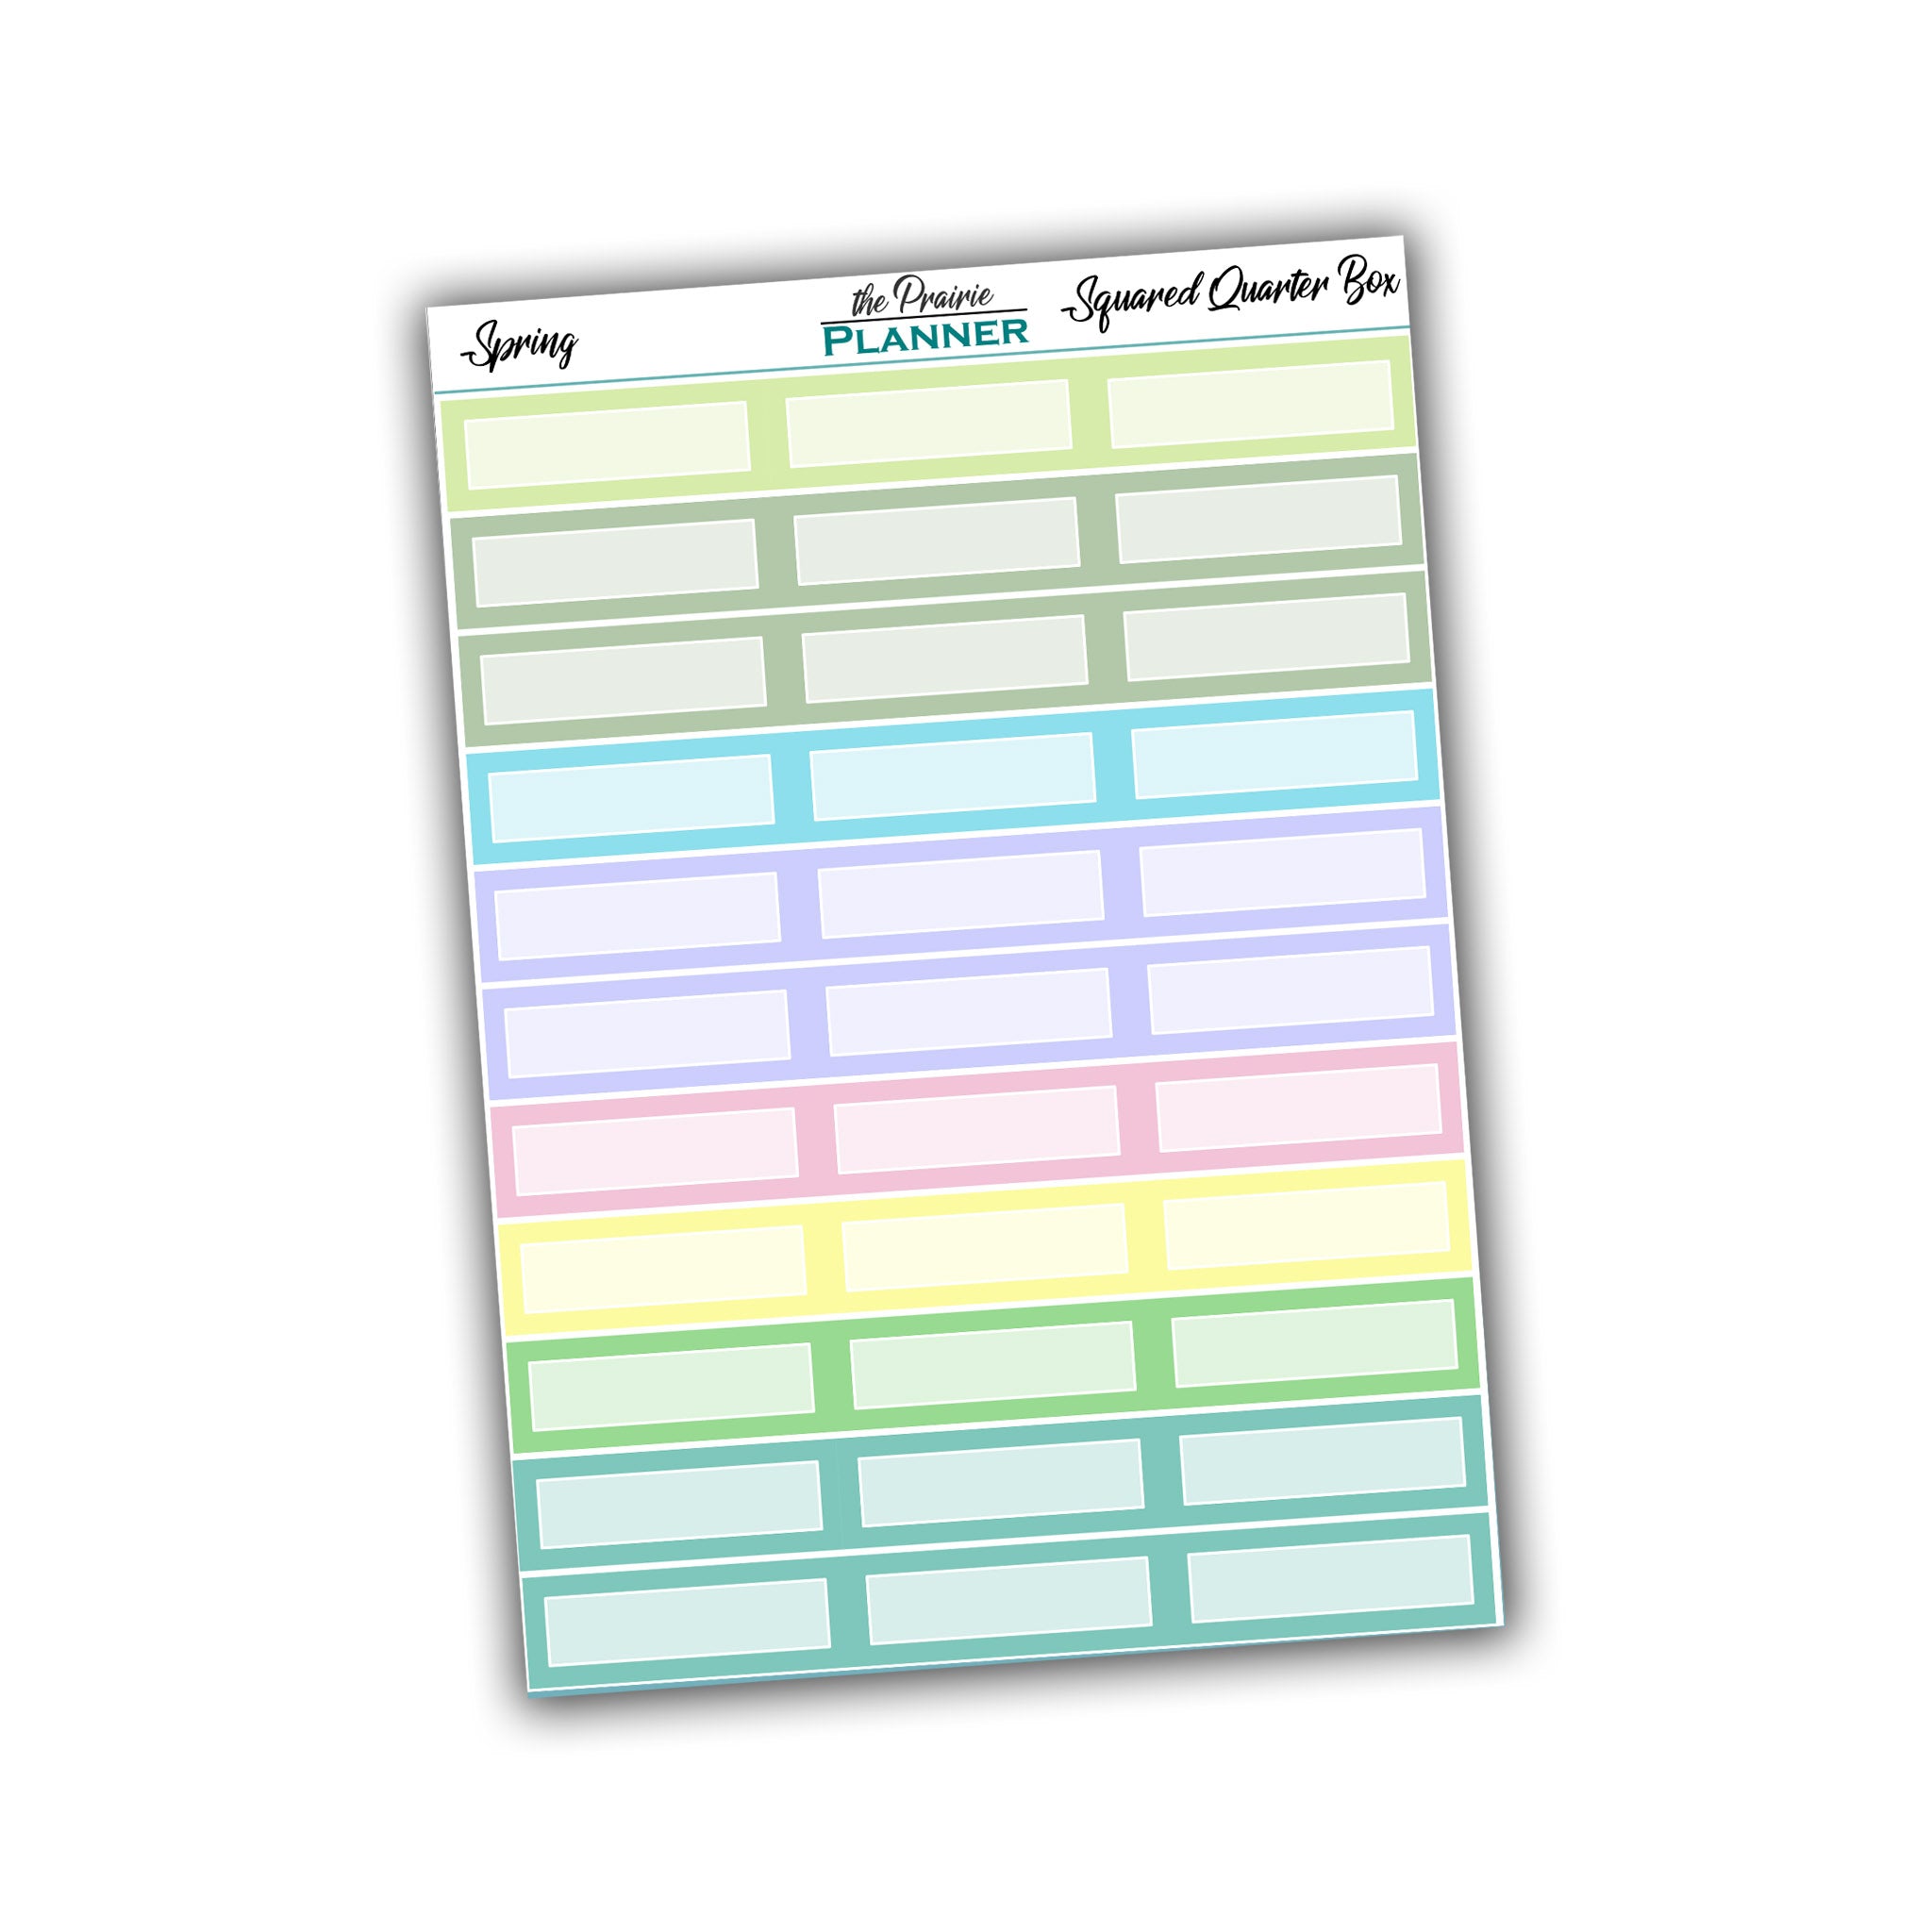 Squared Quarter Boxes - Spring Multi Colour - Planner Stickers